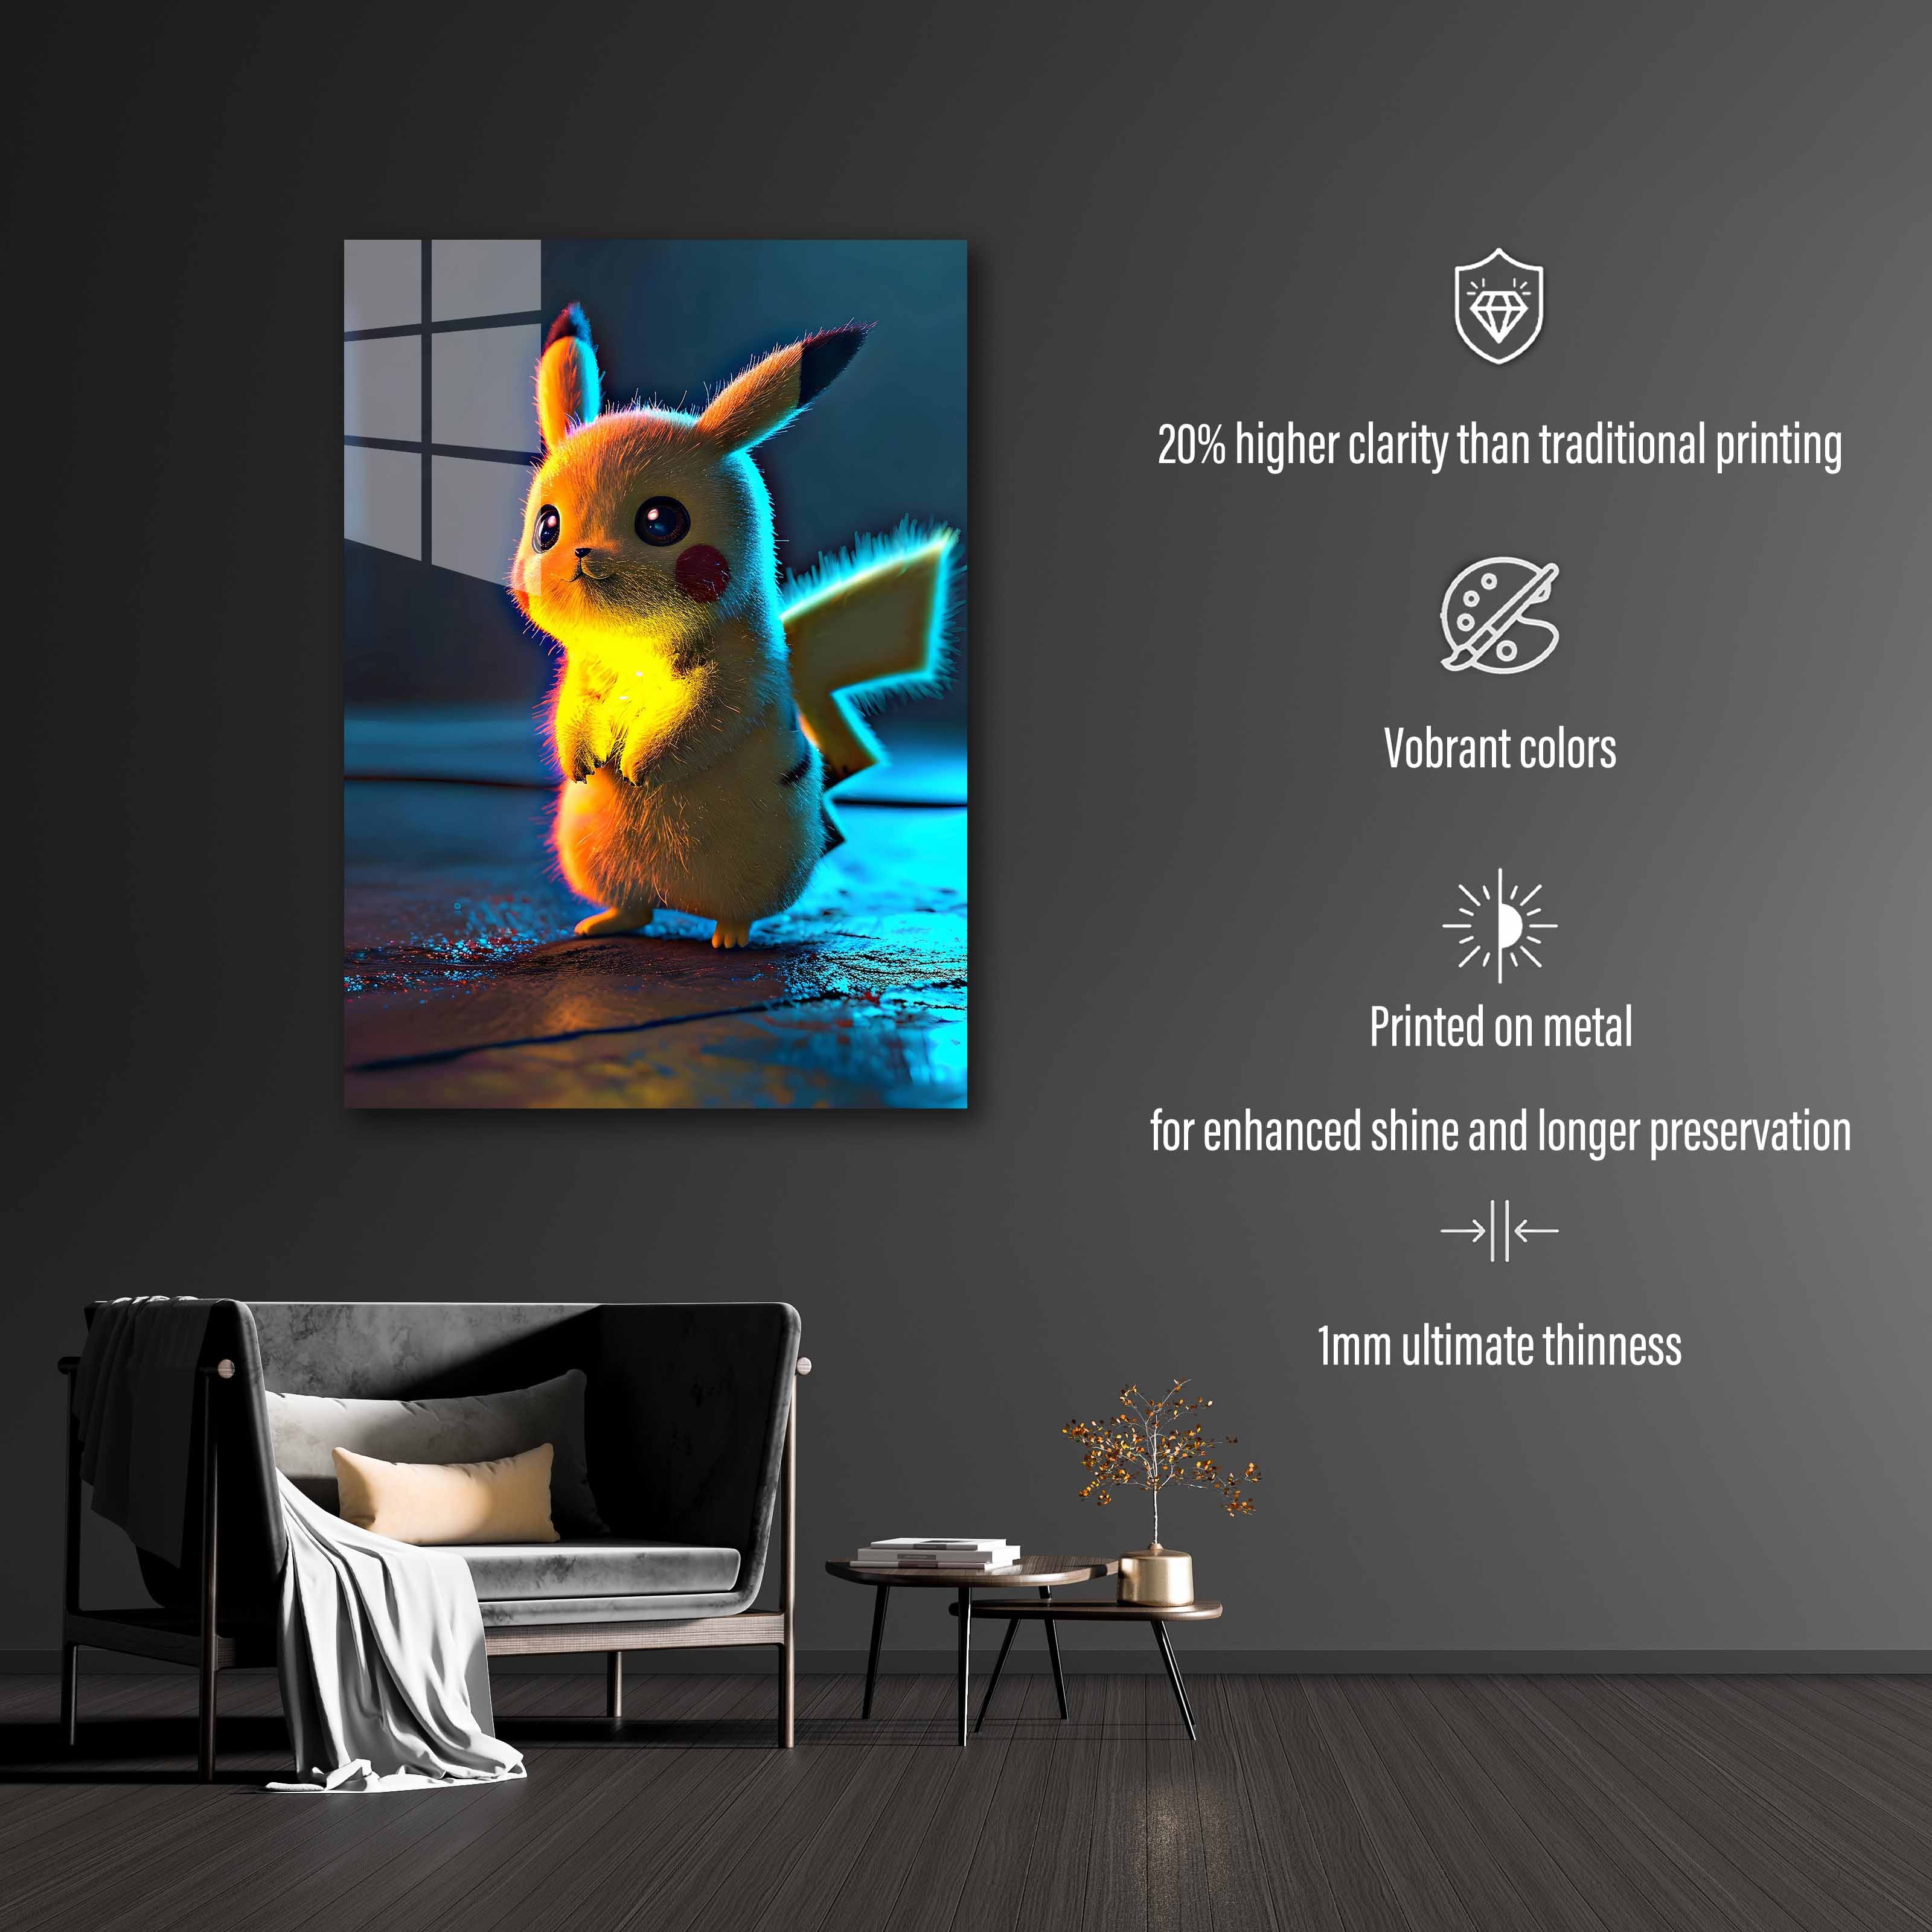 Pikachu from pokemon-designed by @Blinkburst